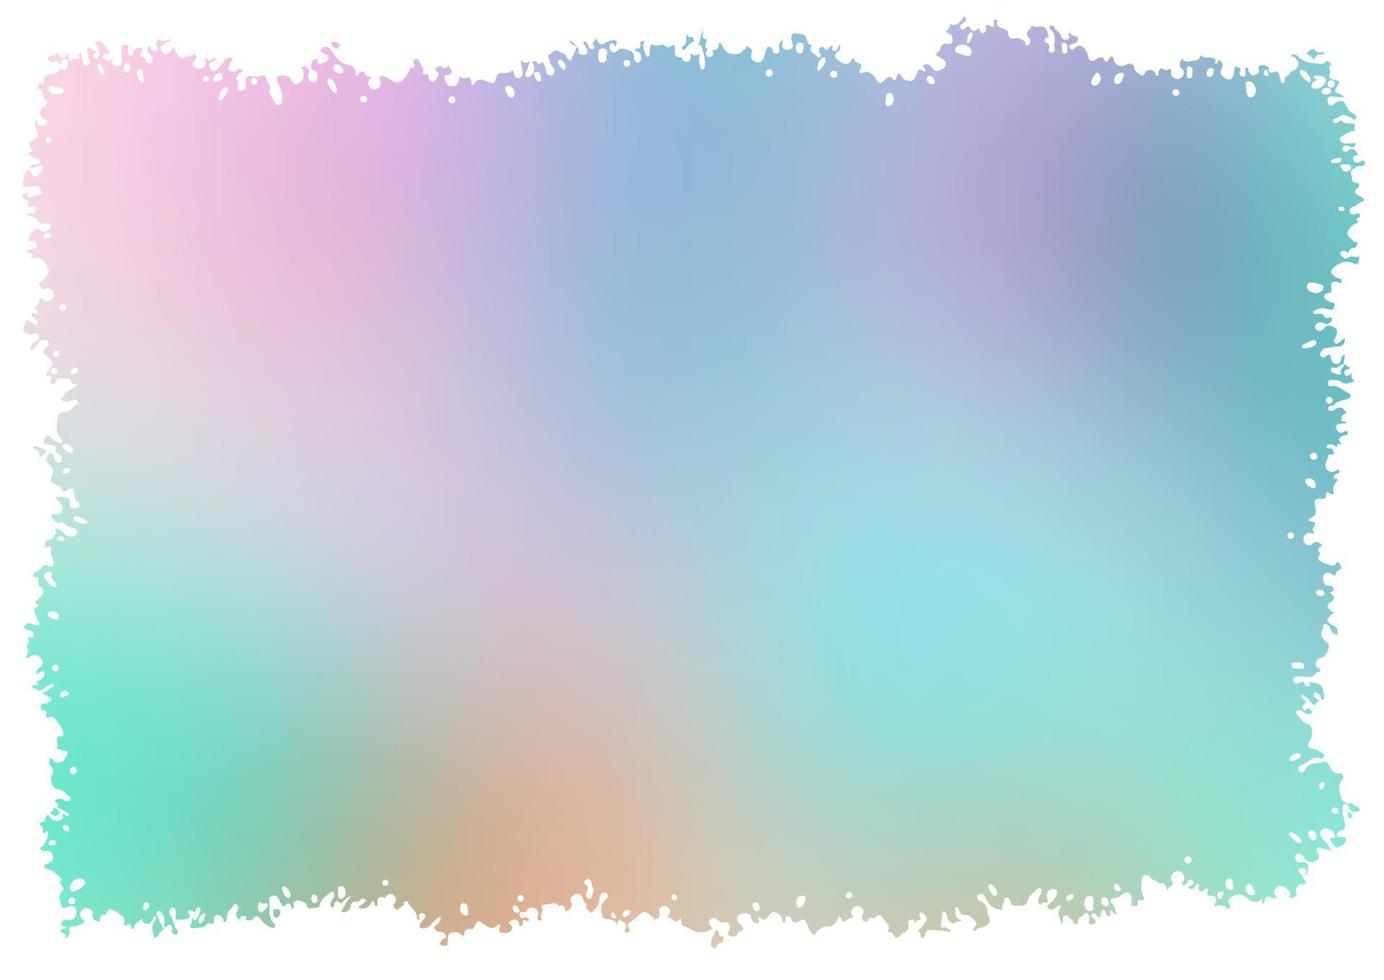 Grunge abstract gradient blur background vector